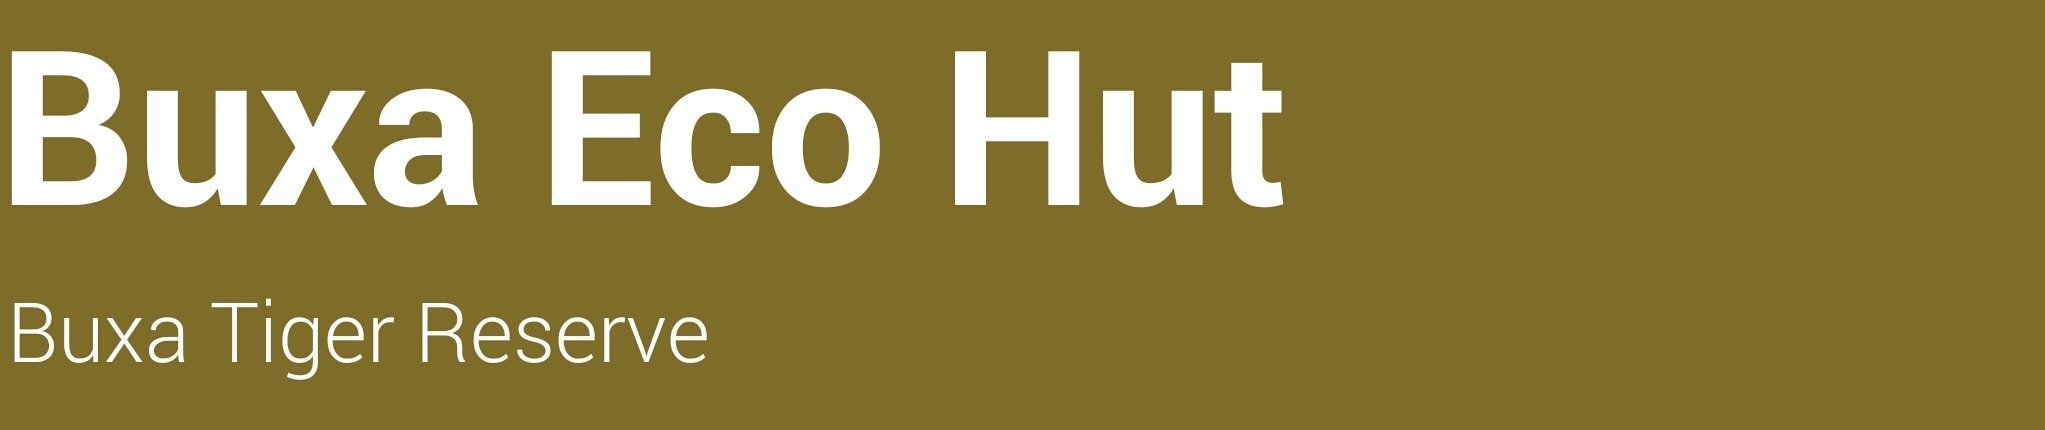 Buxa Eco Hut